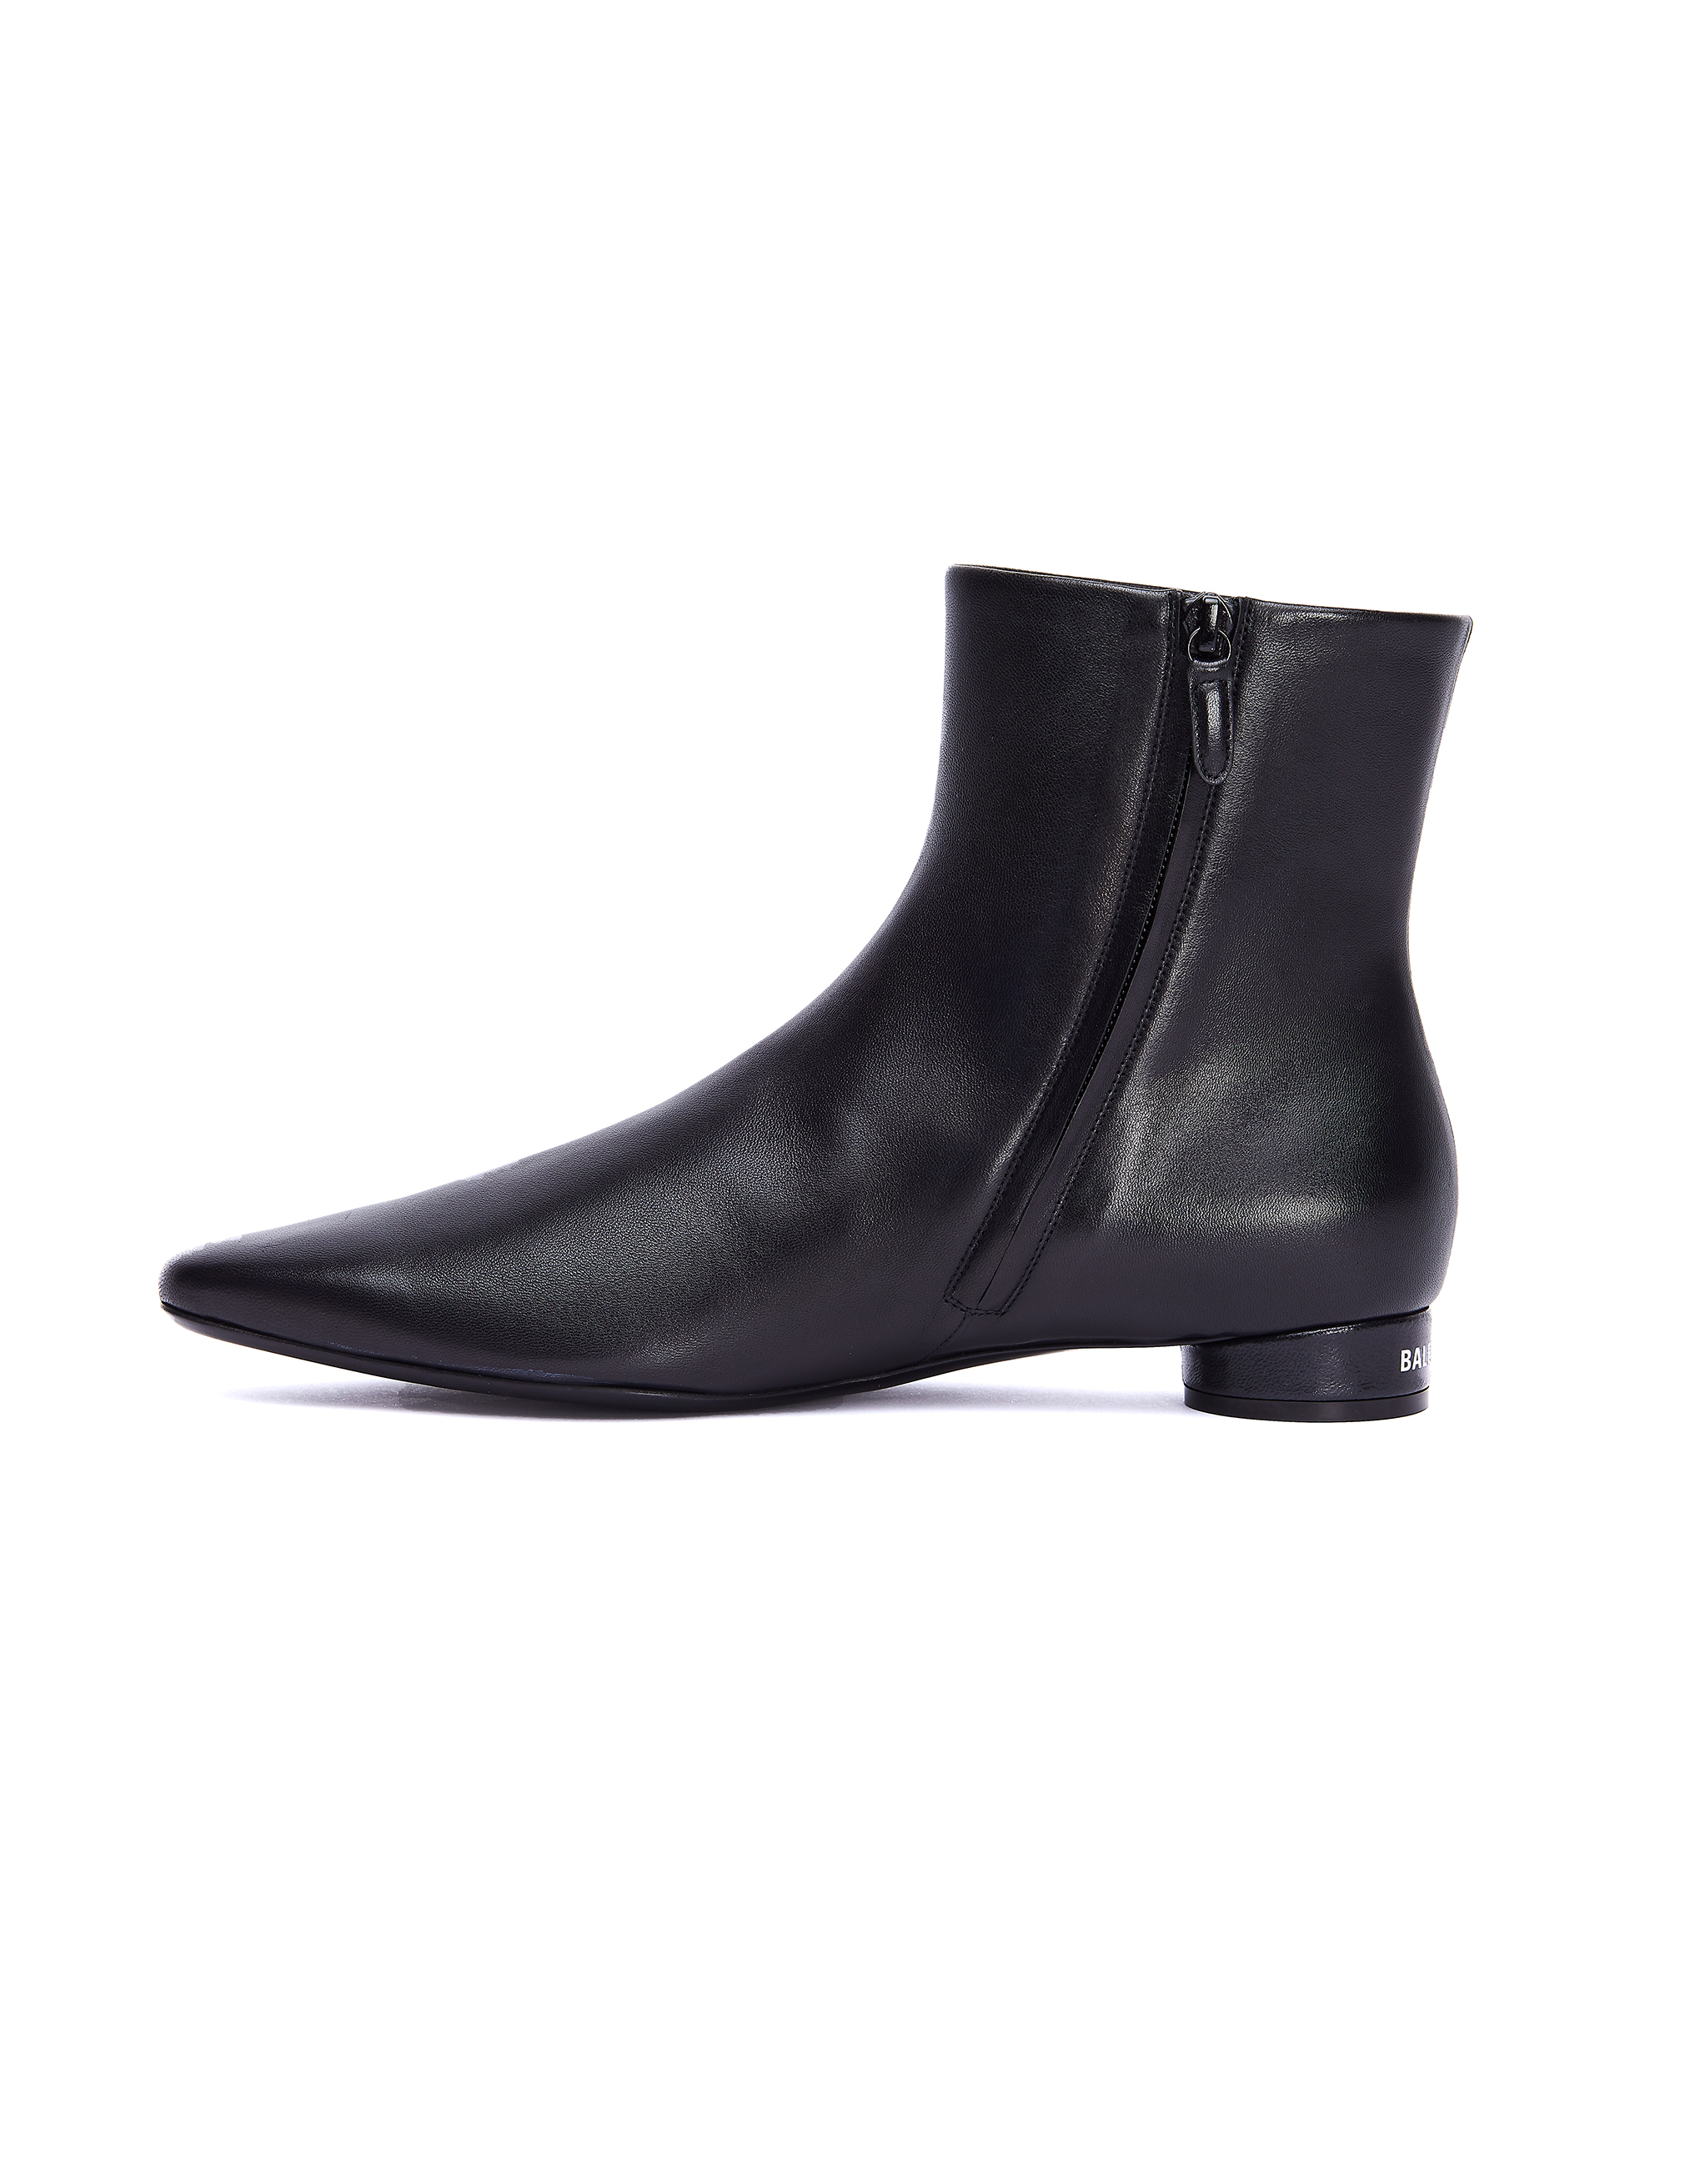 ZOOFASHIONS on X: @BALENCIAGA Strike 20mm Black Boots:   #balenciaga #balenciagalover #balenciagaparis  #demnagvasalia #highfashion #stylegram #instagood #luxurious #luxury  #luxurylifestyle #fashion #style #instastyle #styleformen